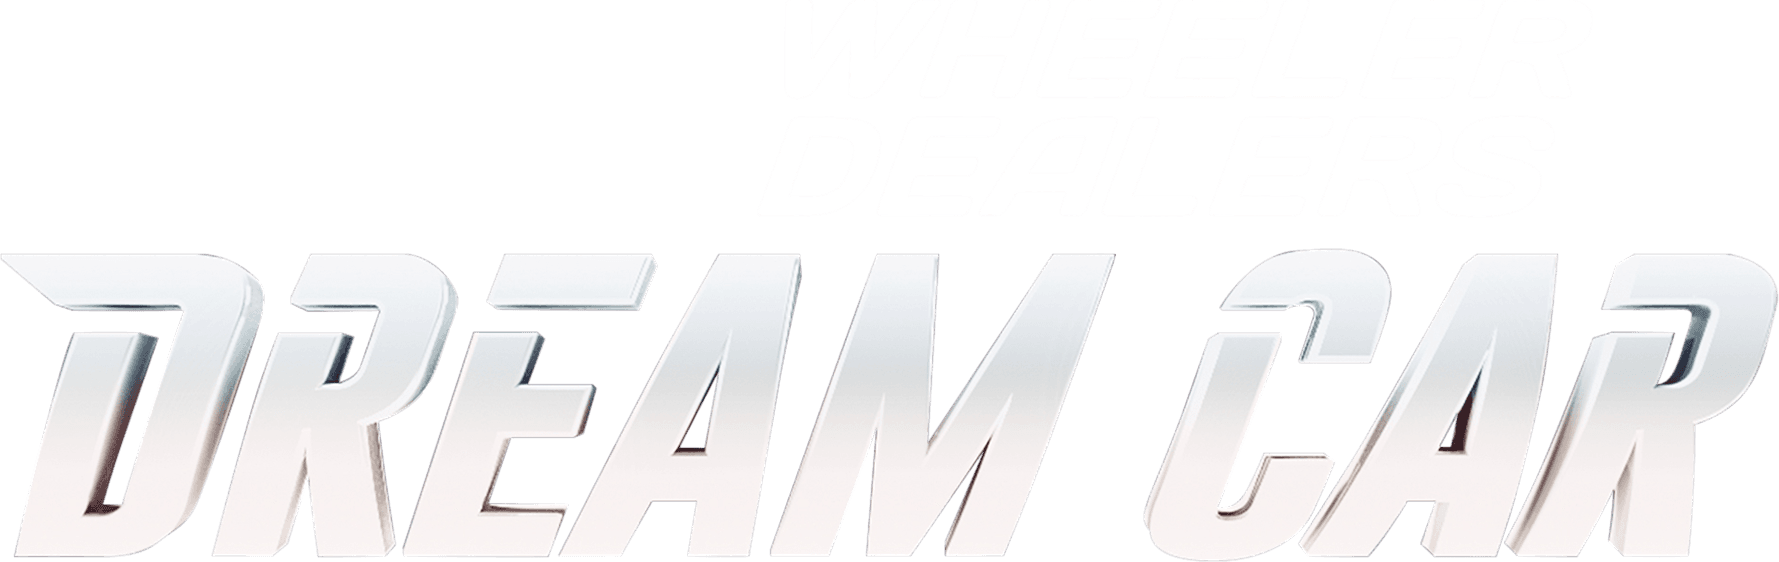 Wheeler Dealers: Dream Car logo